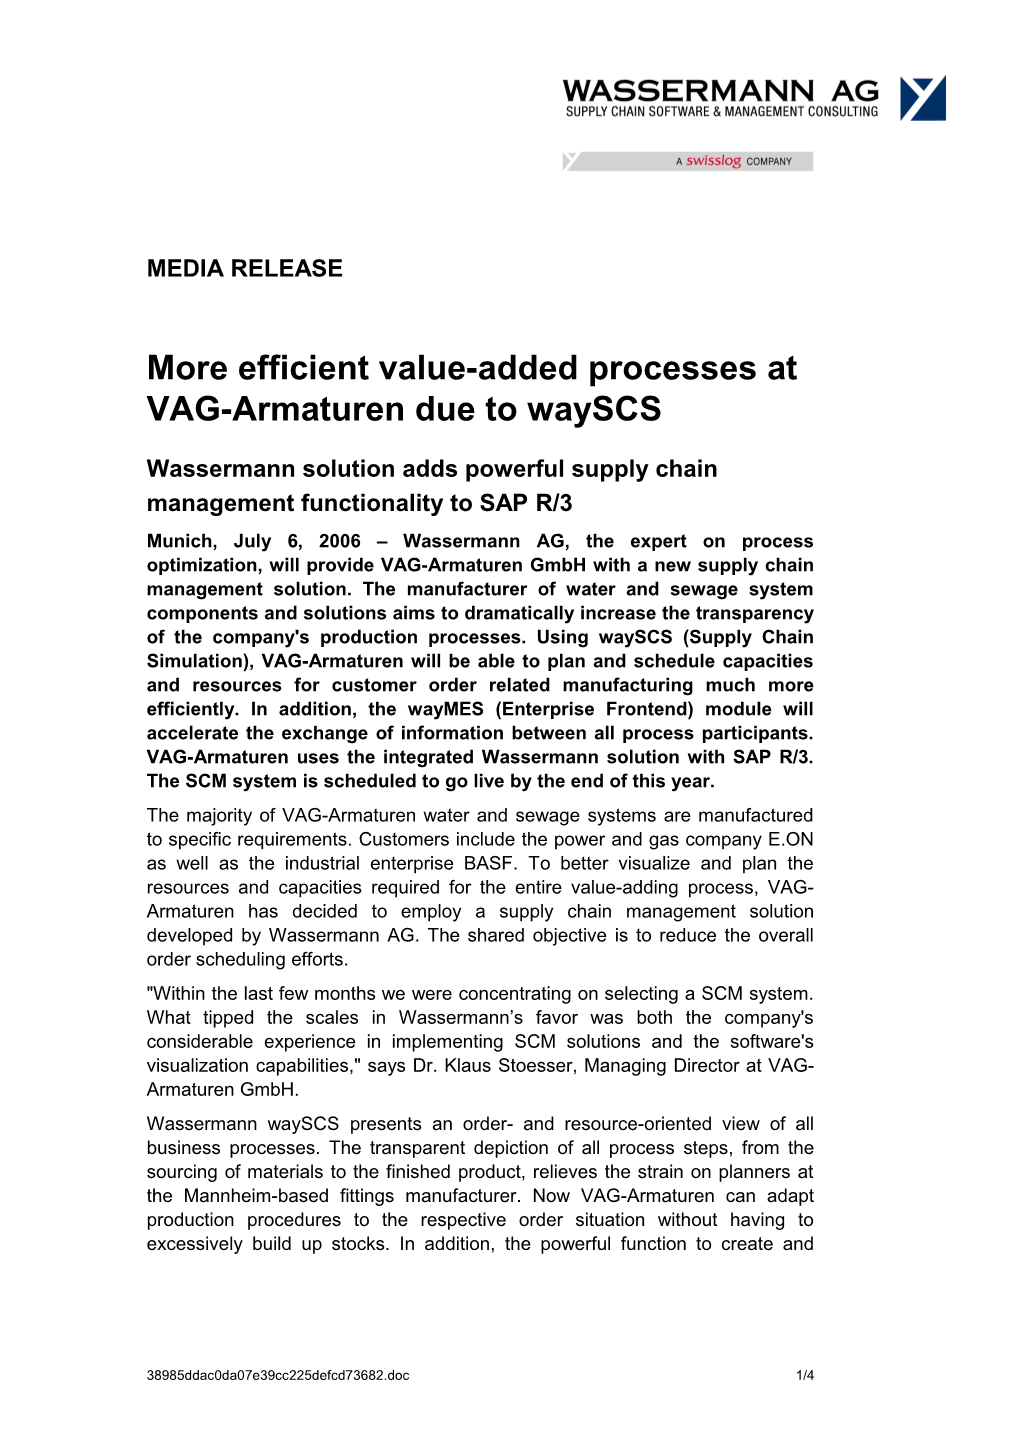 More Efficient Value-Added Processes at VAG-Armaturen Due to Wayscs